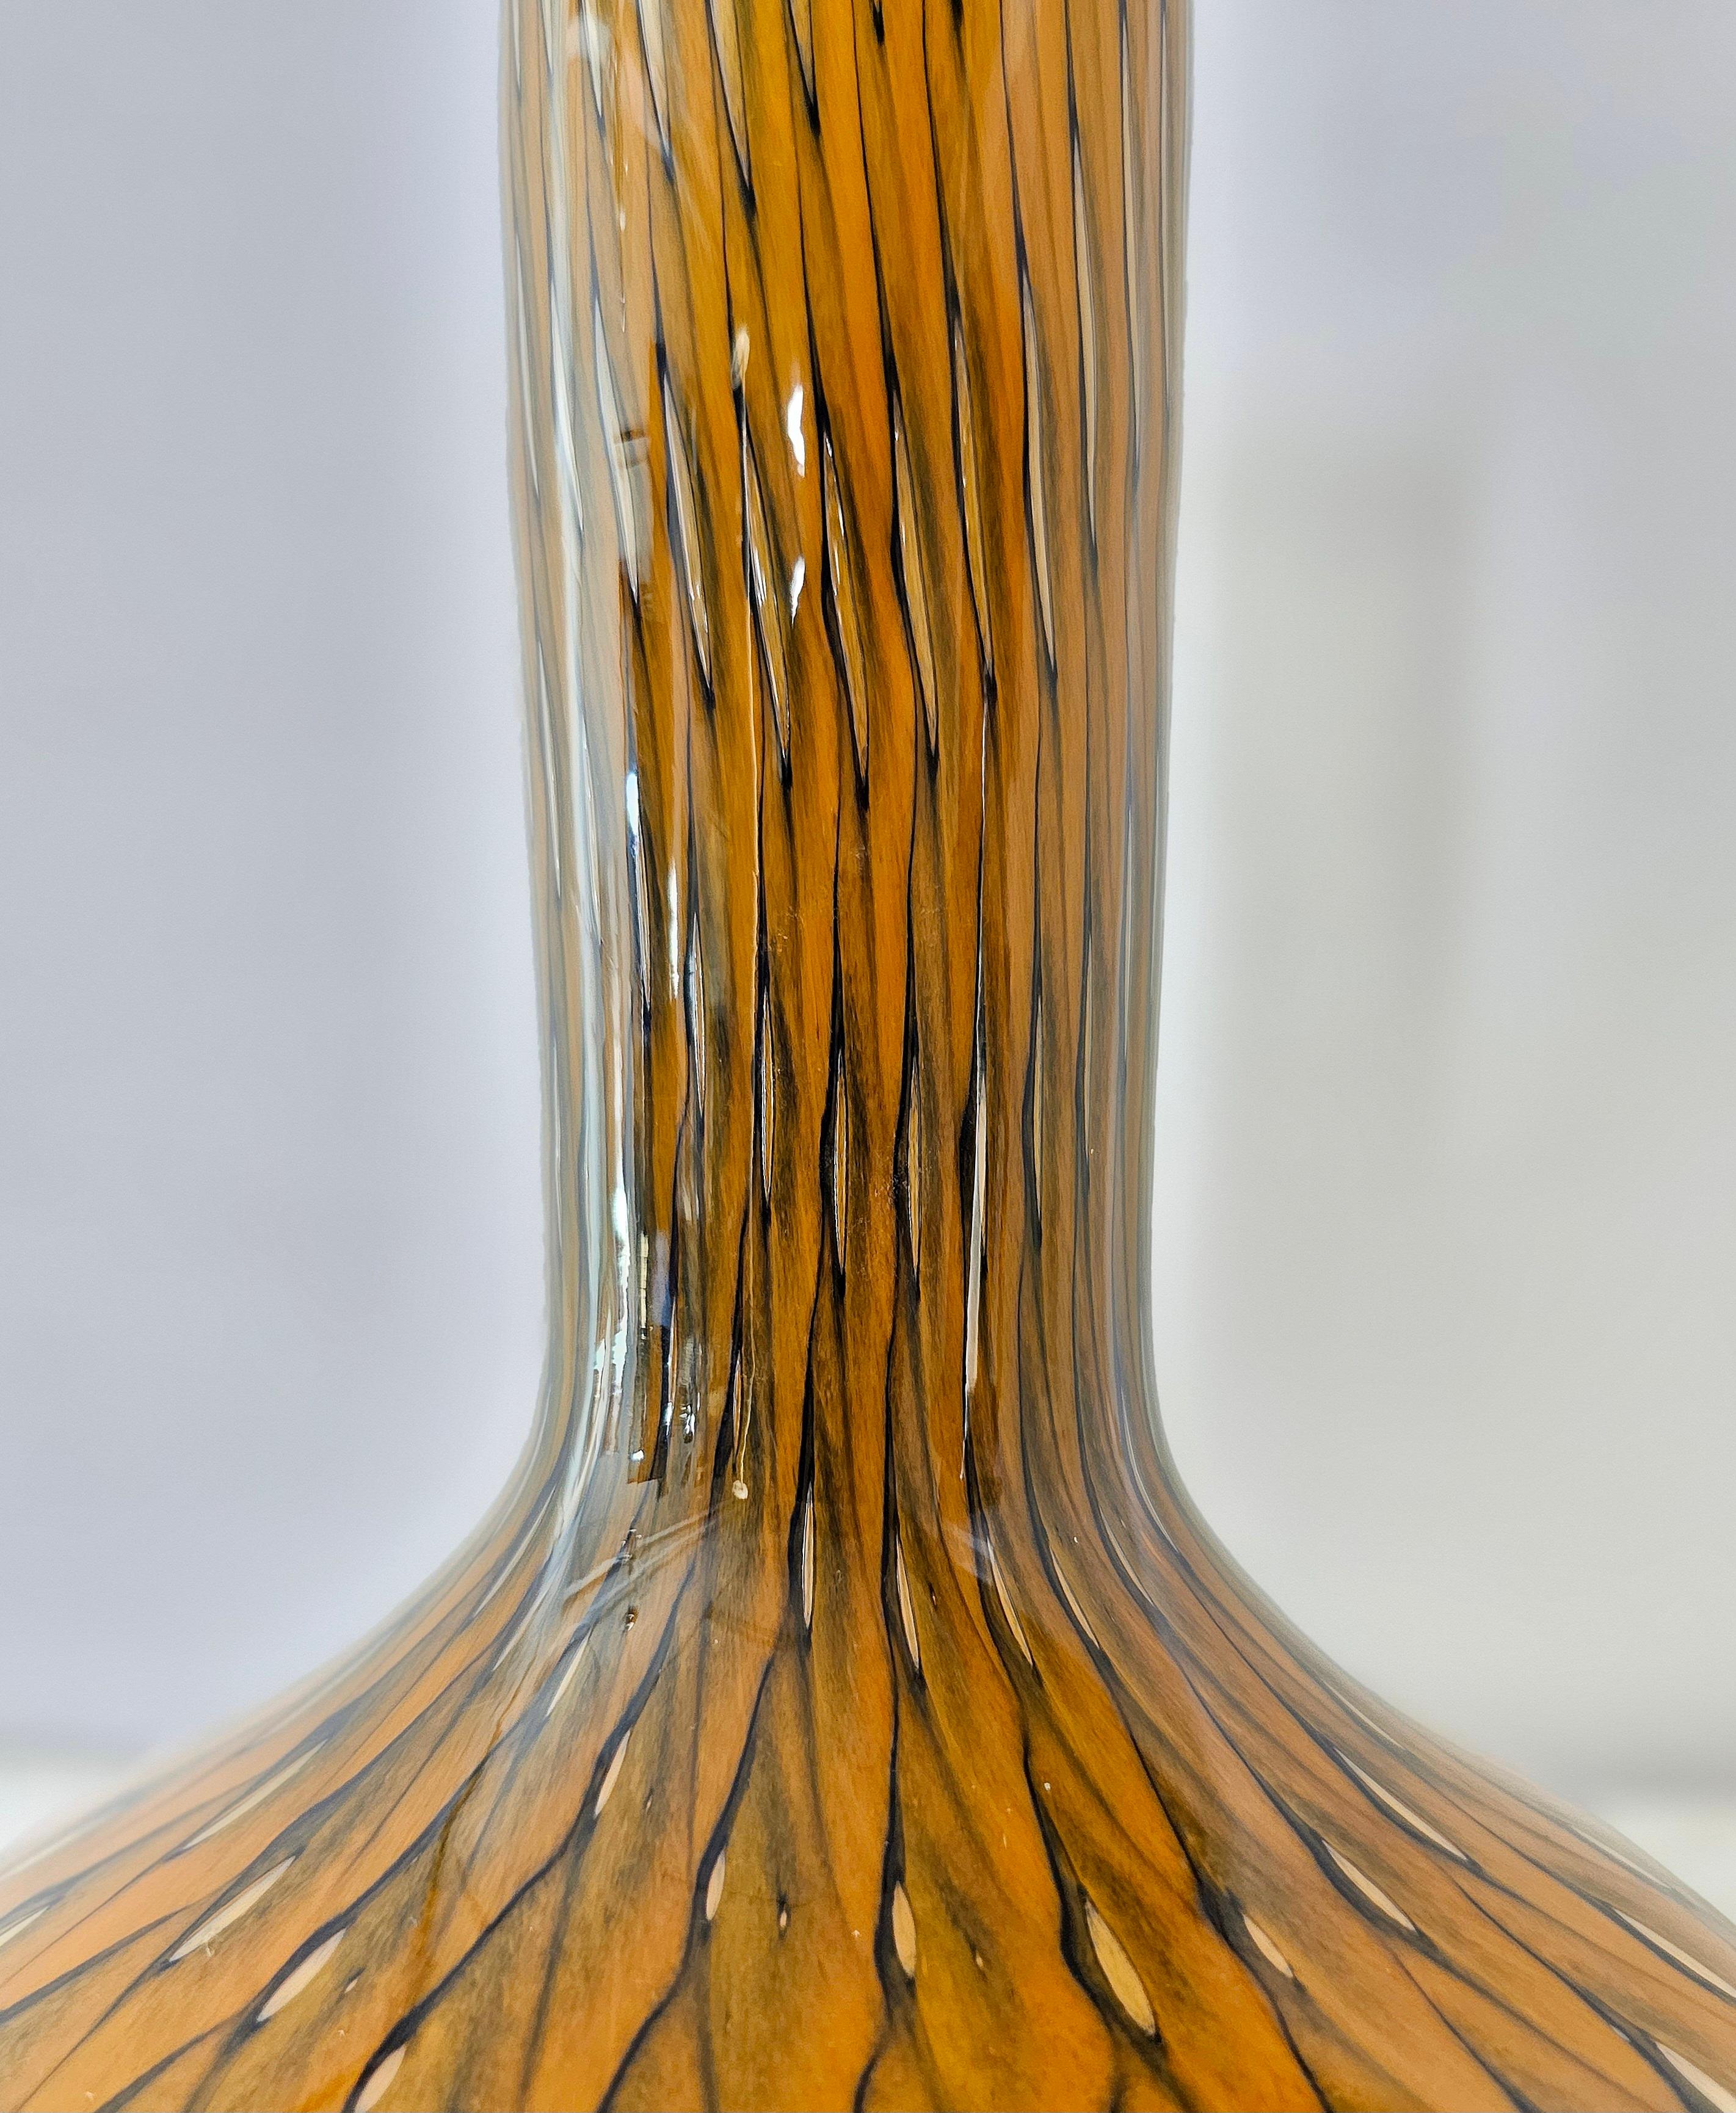 Vase Decorative Object Murano Glass Decorated Midcentury Italian Design 1970s For Sale 3